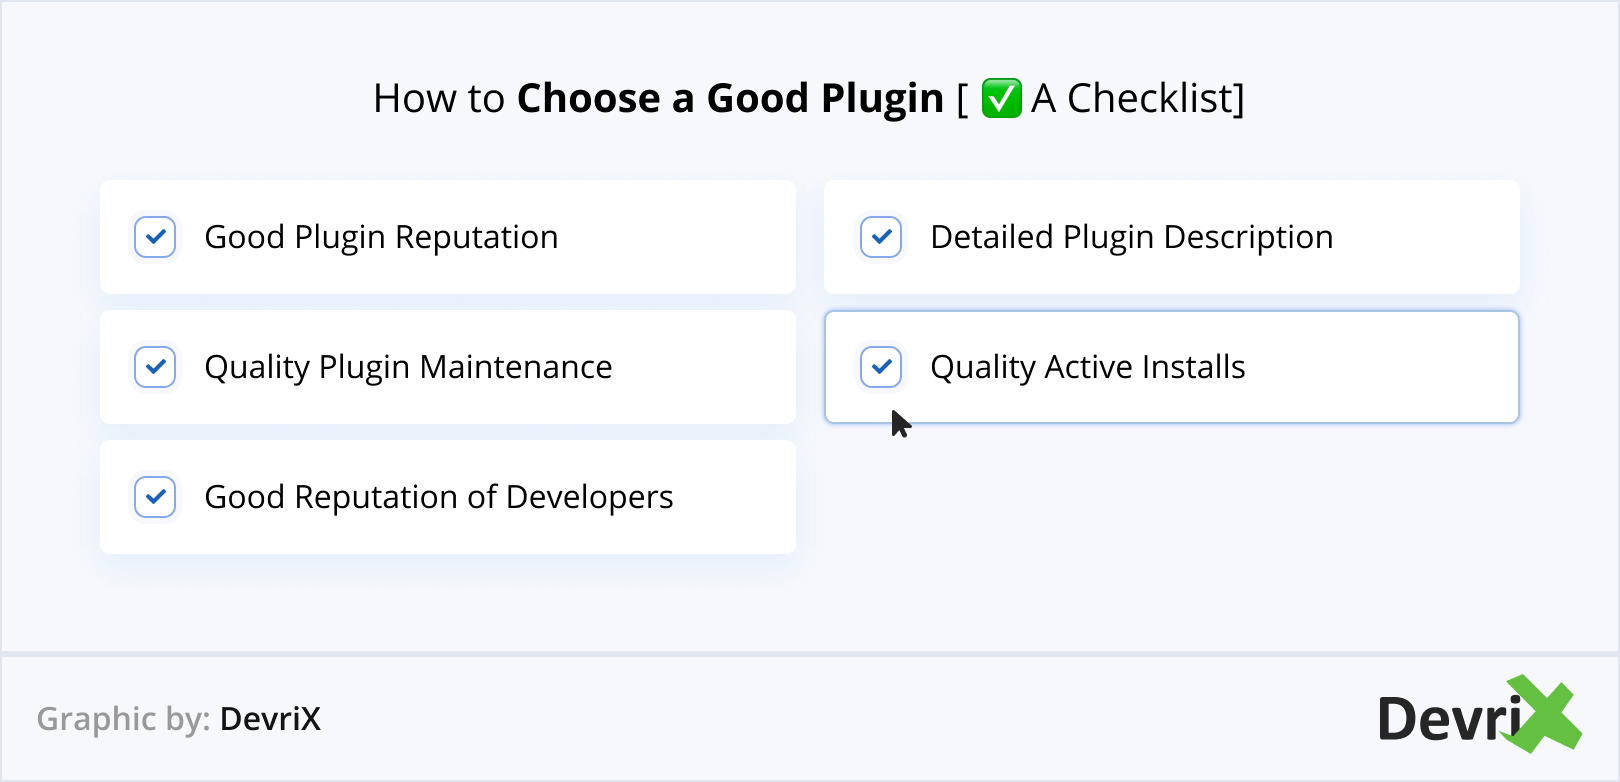 How to Choose a Good Plugin A Checklist